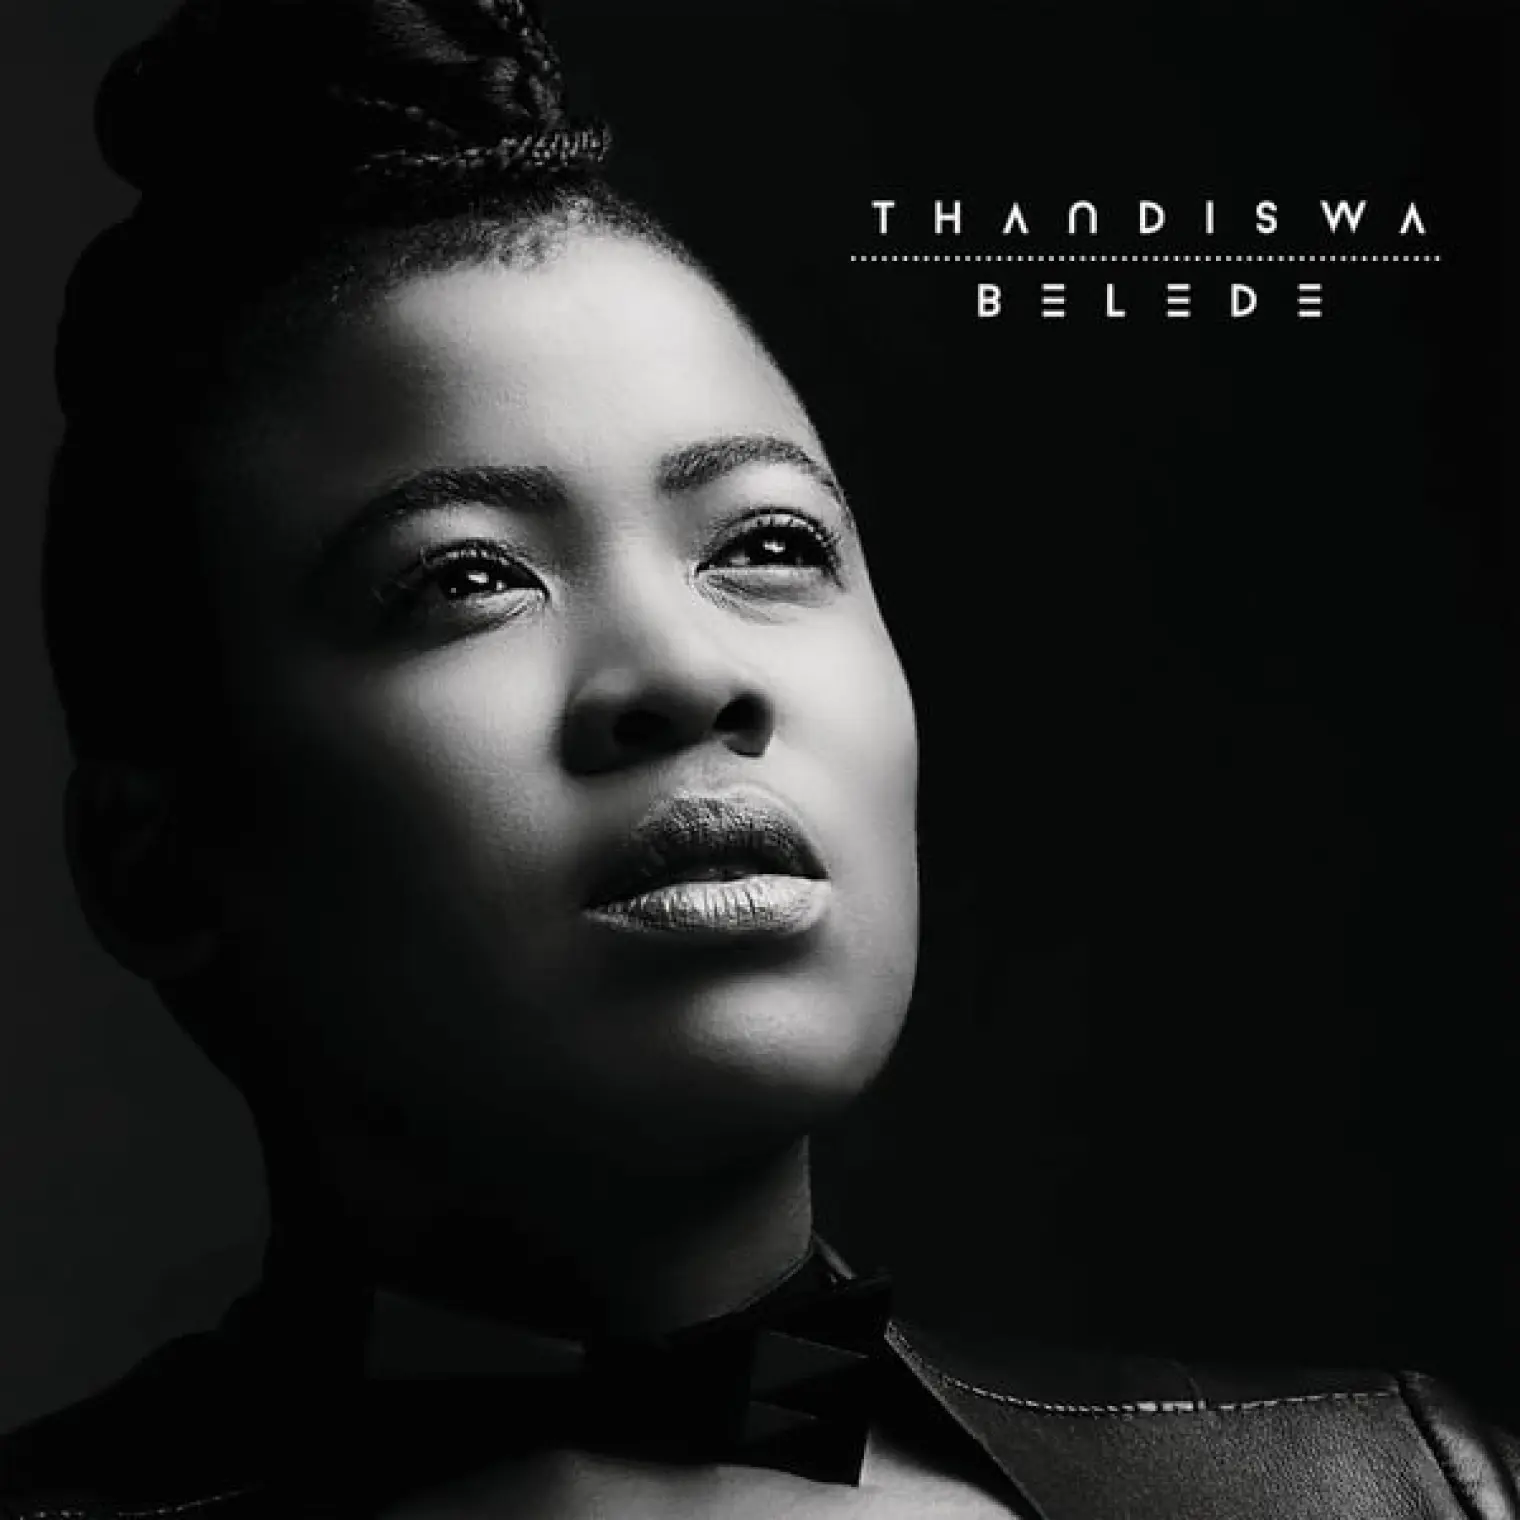 Belede -  Thandiswa 